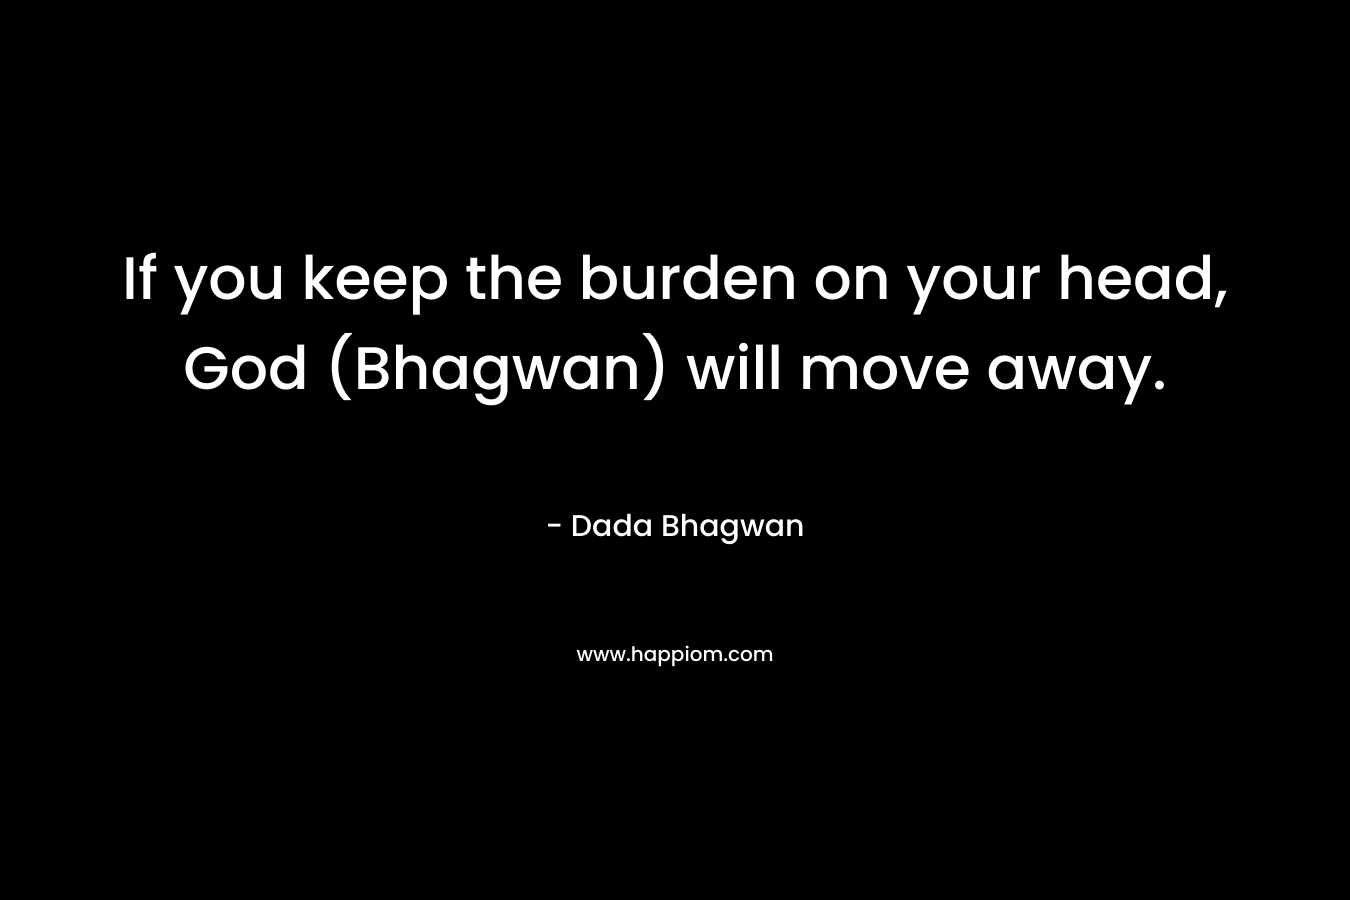 If you keep the burden on your head, God (Bhagwan) will move away.